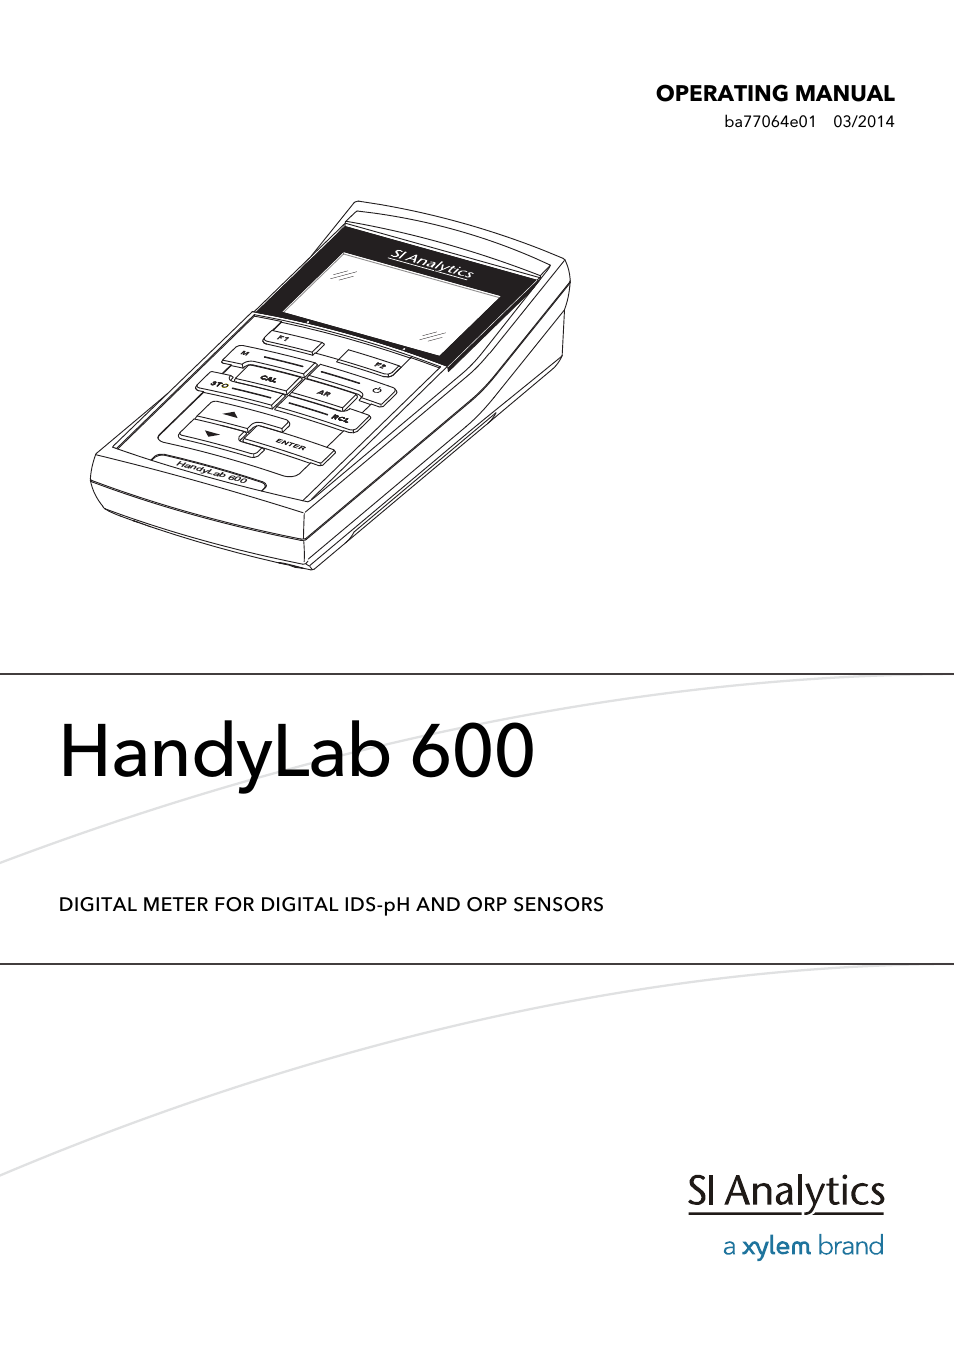 HandyLab 600